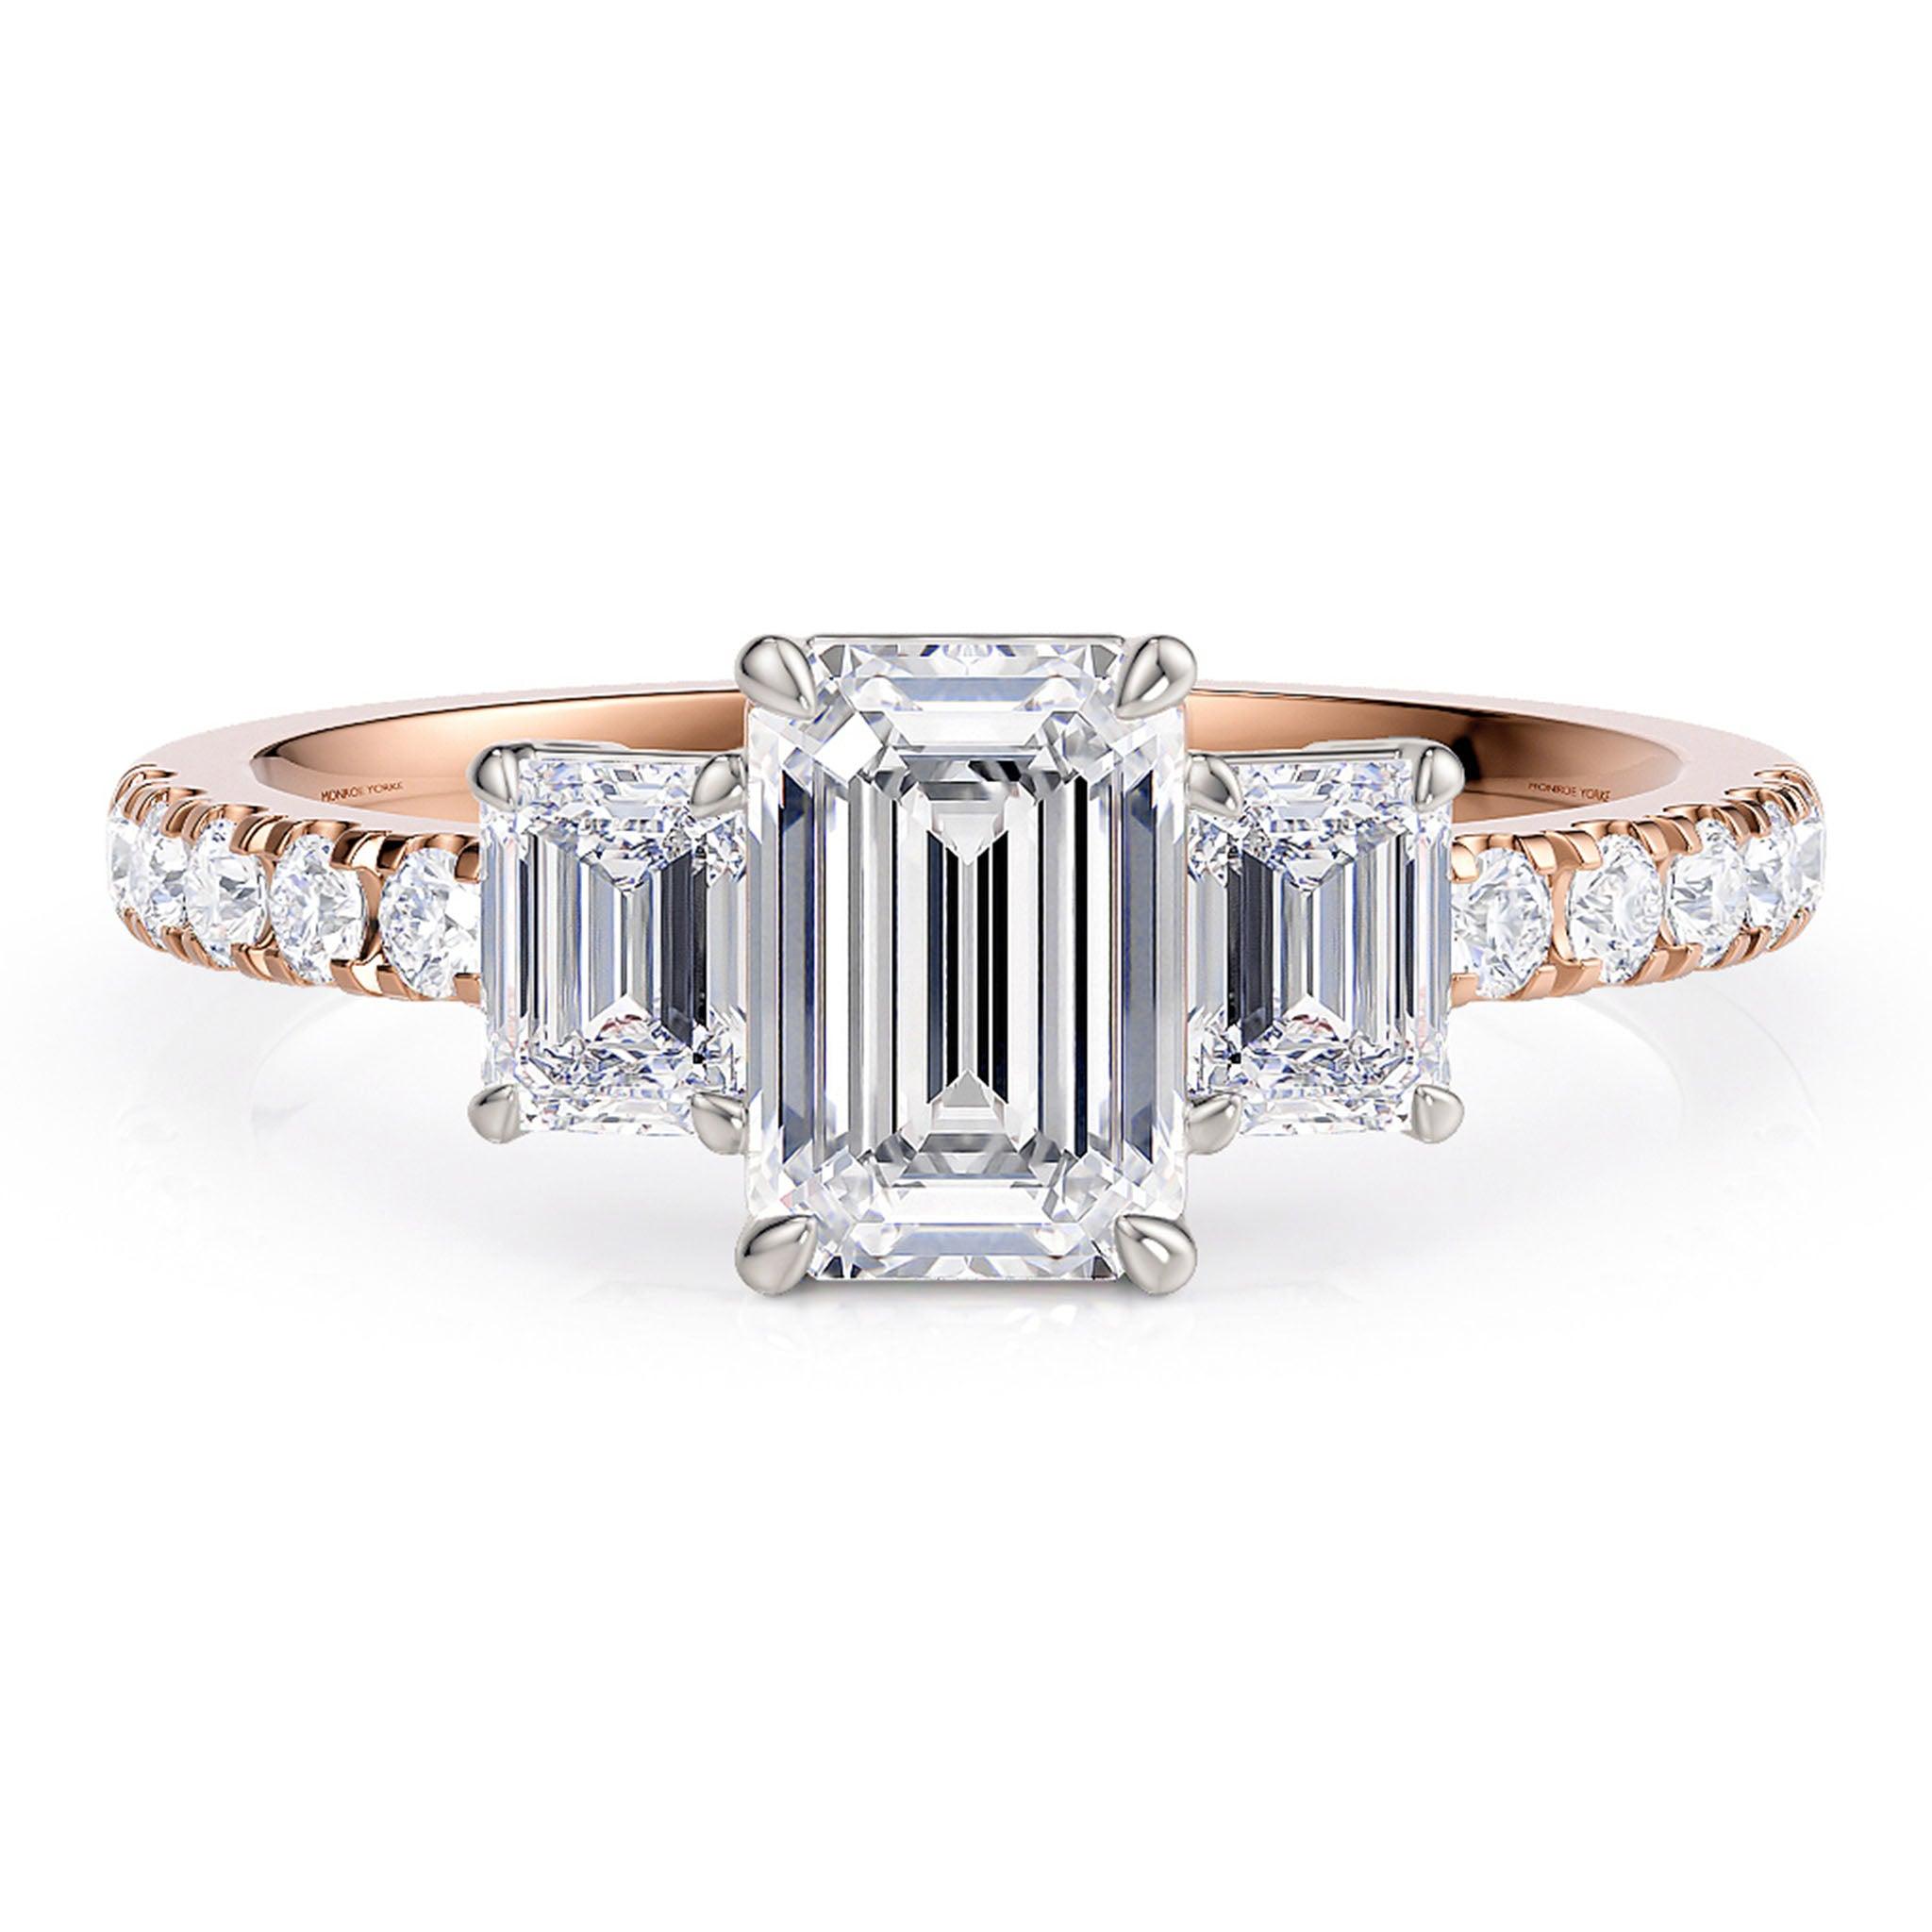 Aspen - emerald cut three diamond ring in rose gold.  Diamond set band in rose gold.  Centre setting where the 3 emerald cut diamonds are set are in white gold.  